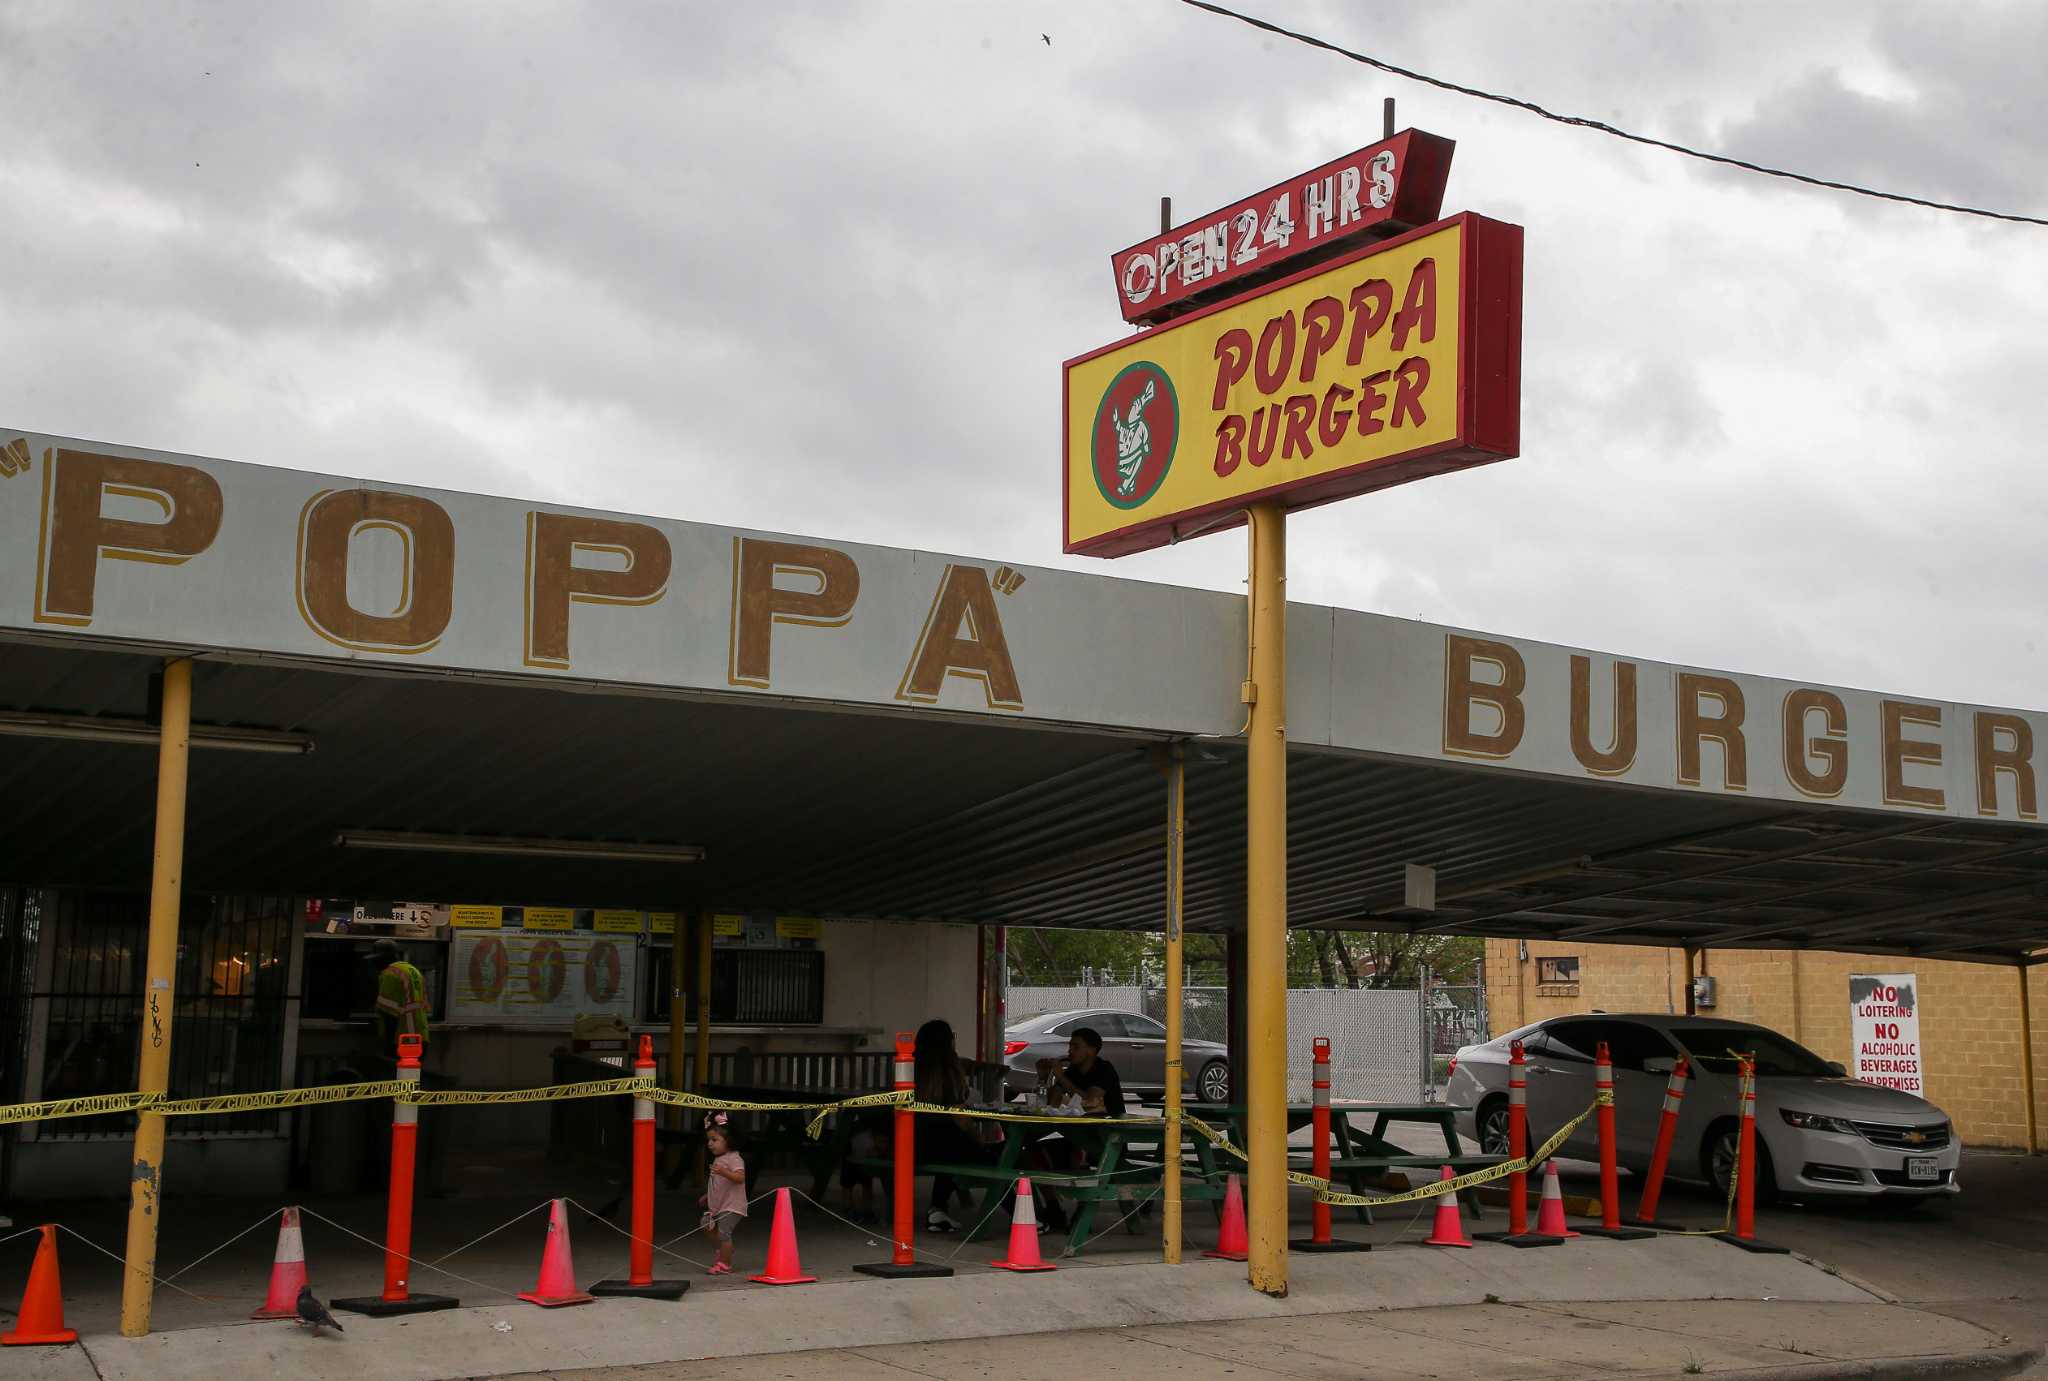 Papa's Burgers in San Antonio rebranding after Pappas Restaurants' legal  challenge - Houston Business Journal